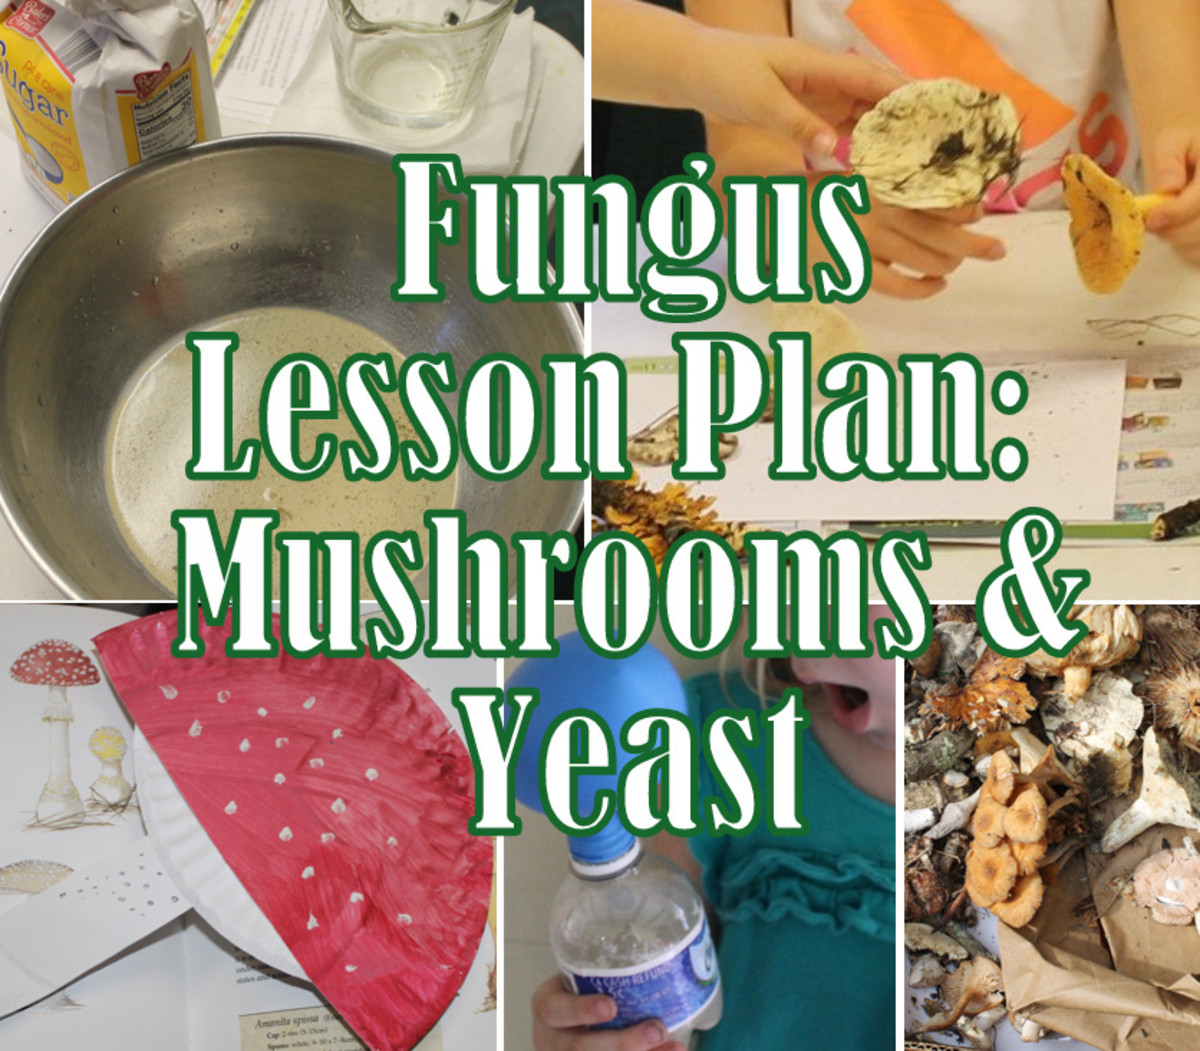 Mushrooms, Yeast, and the Fungi Kingdom Lesson Plan